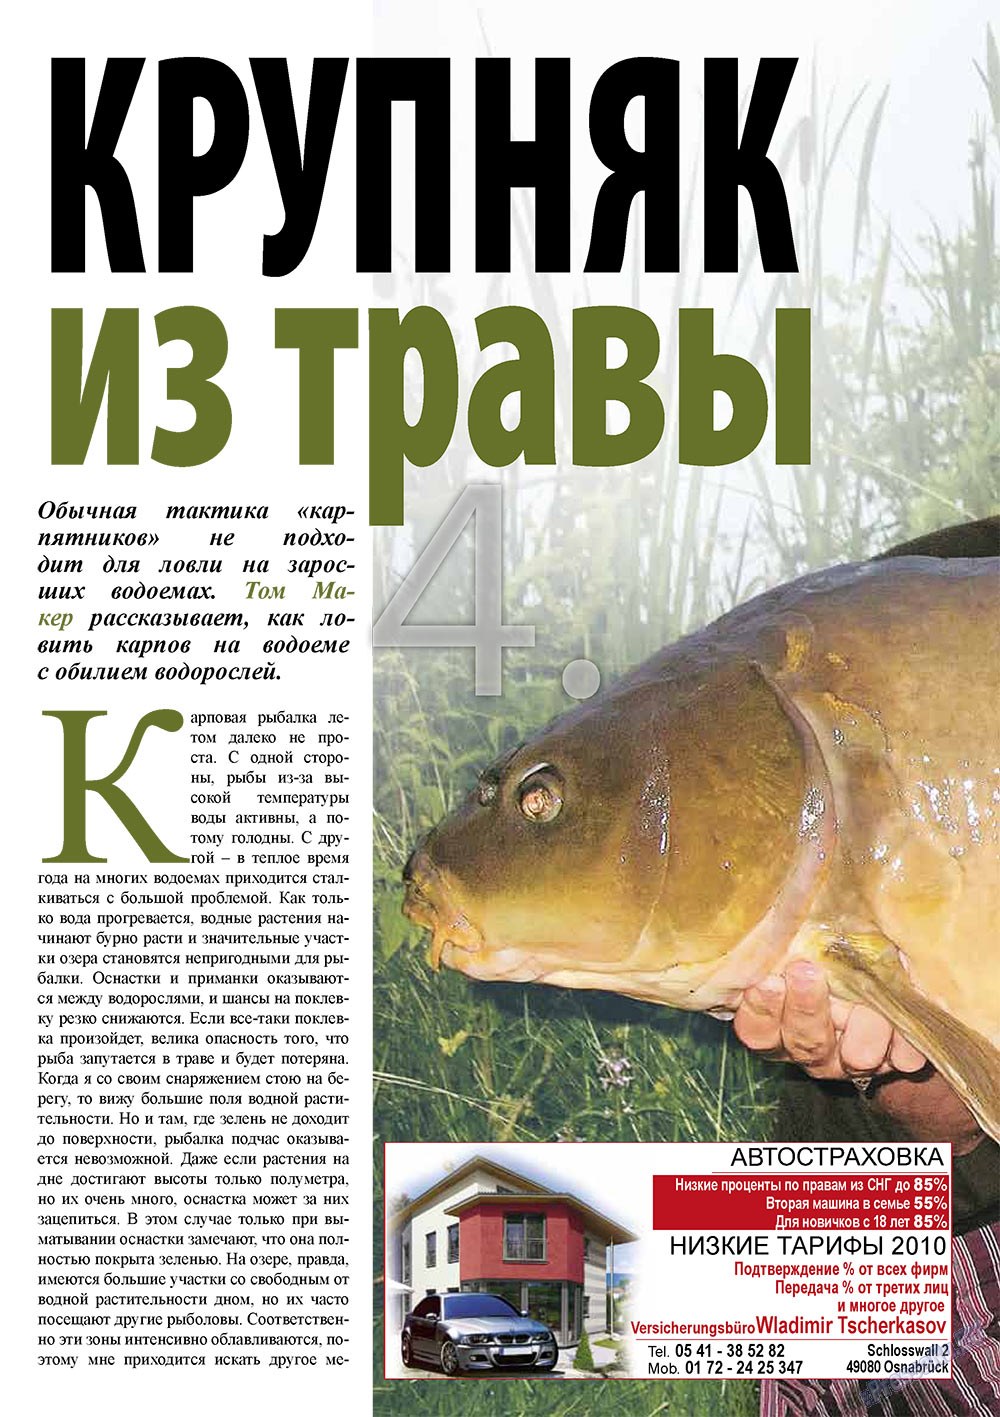 Рыбалка Plus (журнал). 2010 год, номер 9, стр. 4